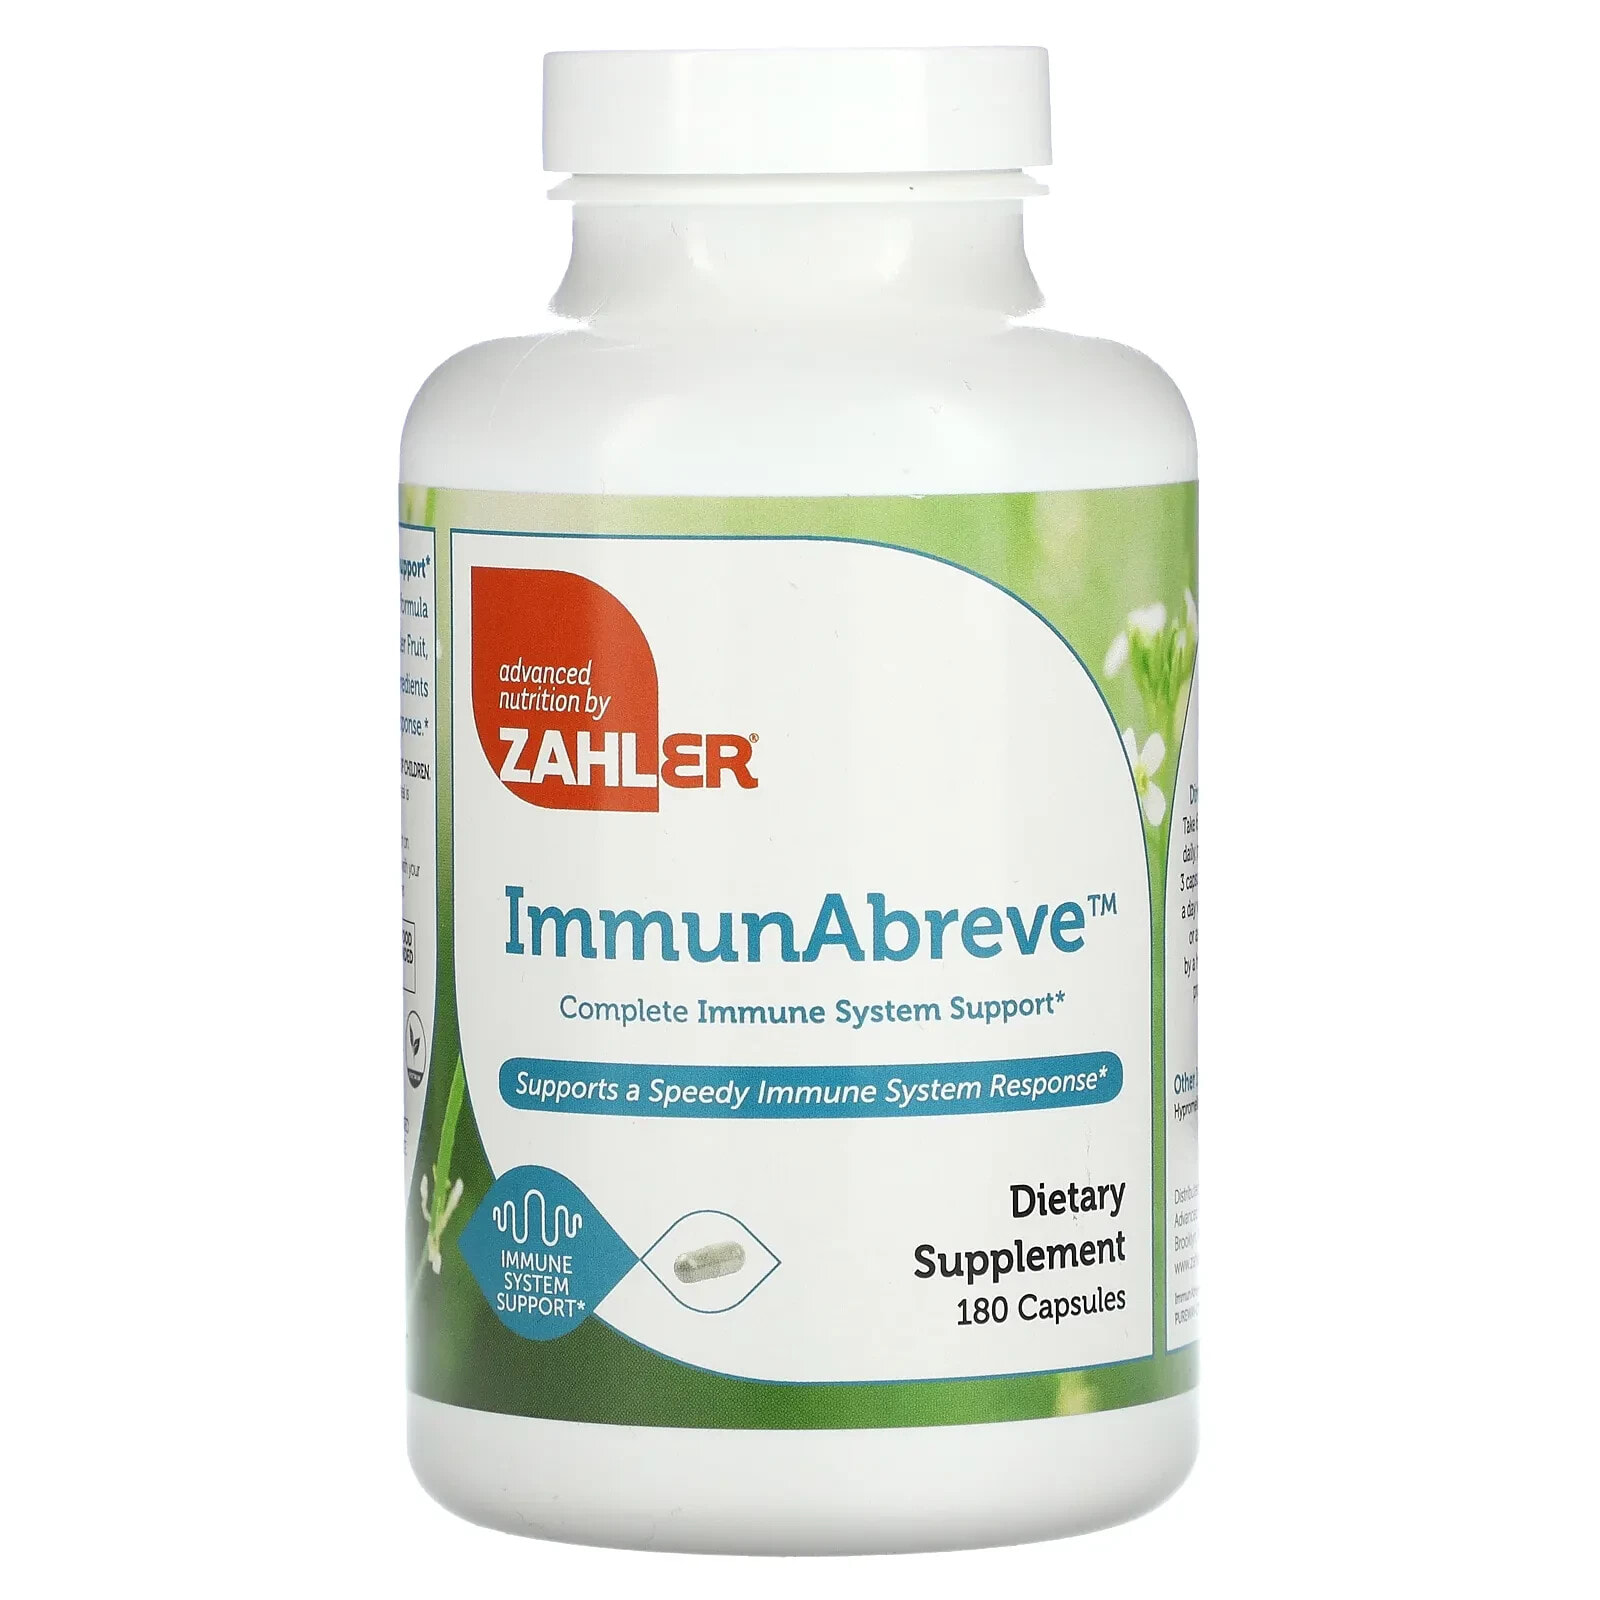 Zahler, ImmunAbreve, Complete Immune System Support, 180 Capsules